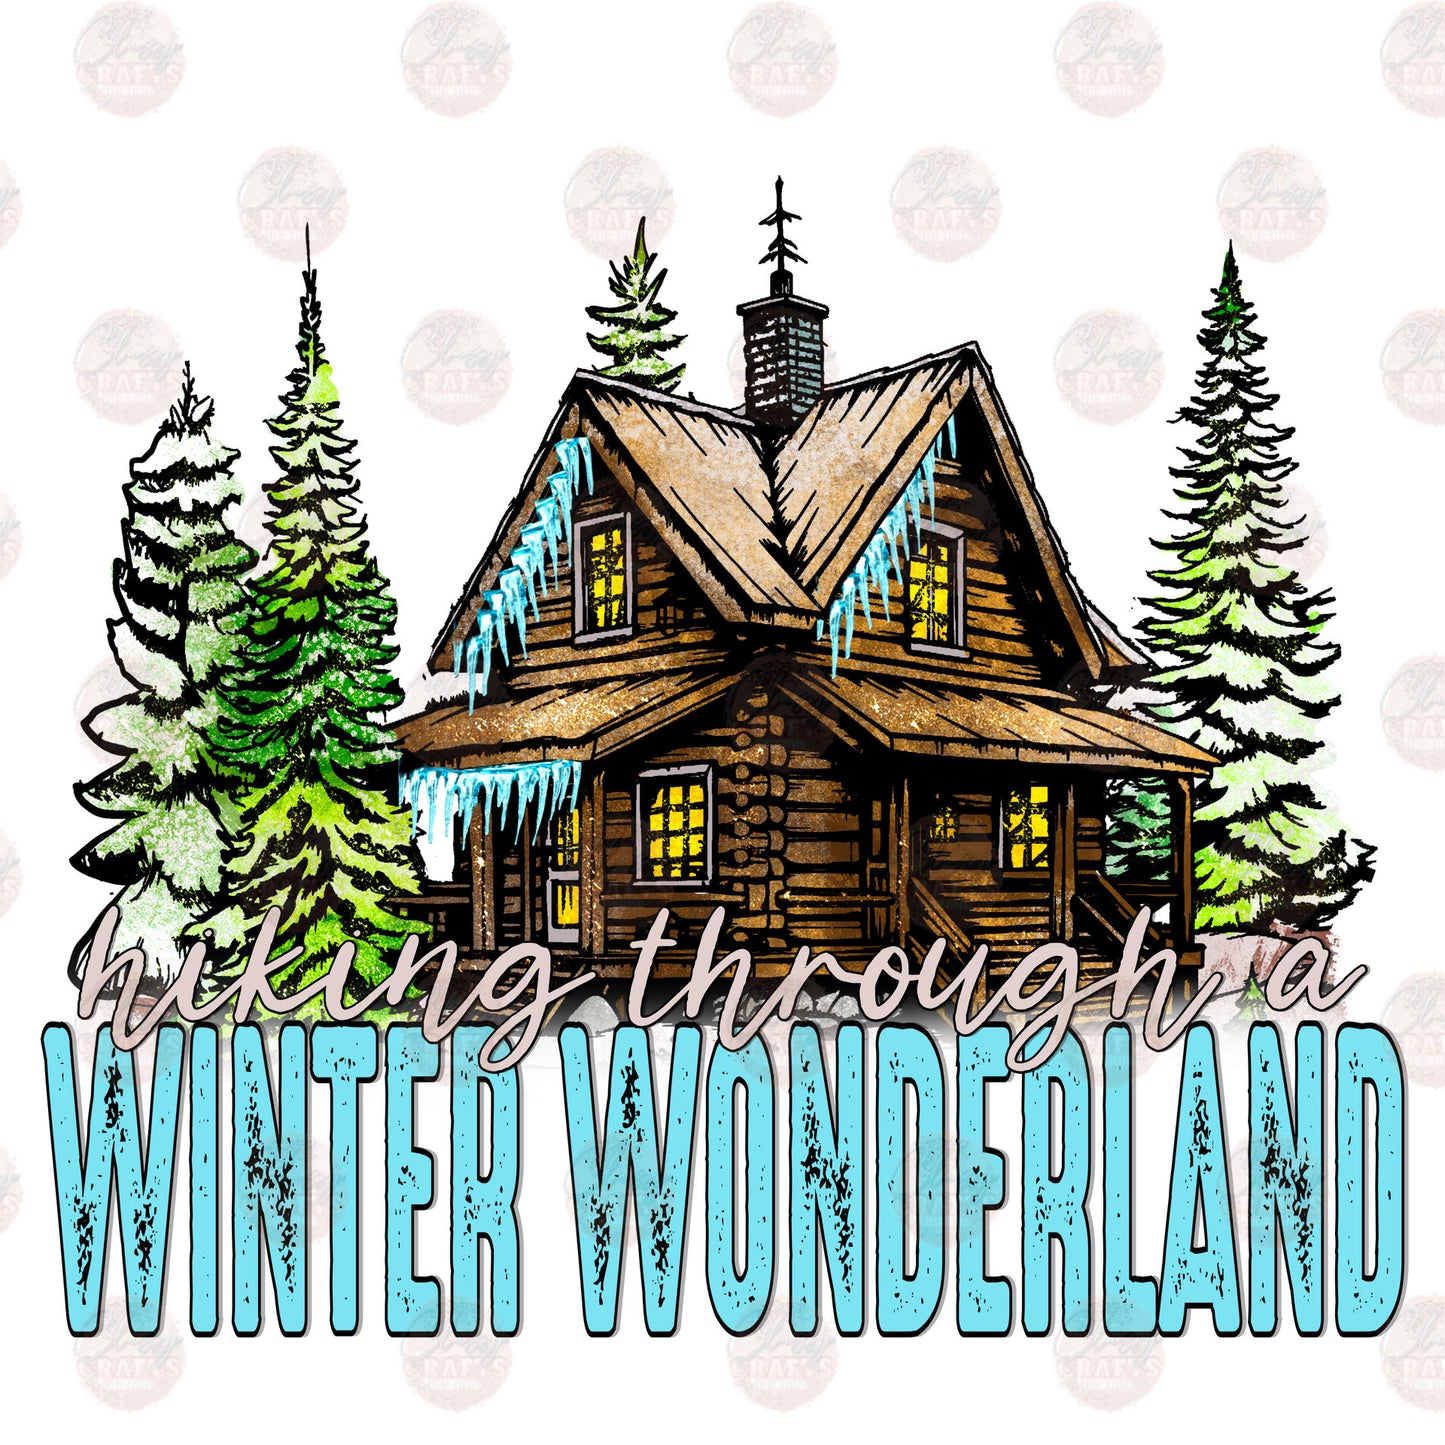 Hiking Through A Winter Wonderland - Sublimation Transfer